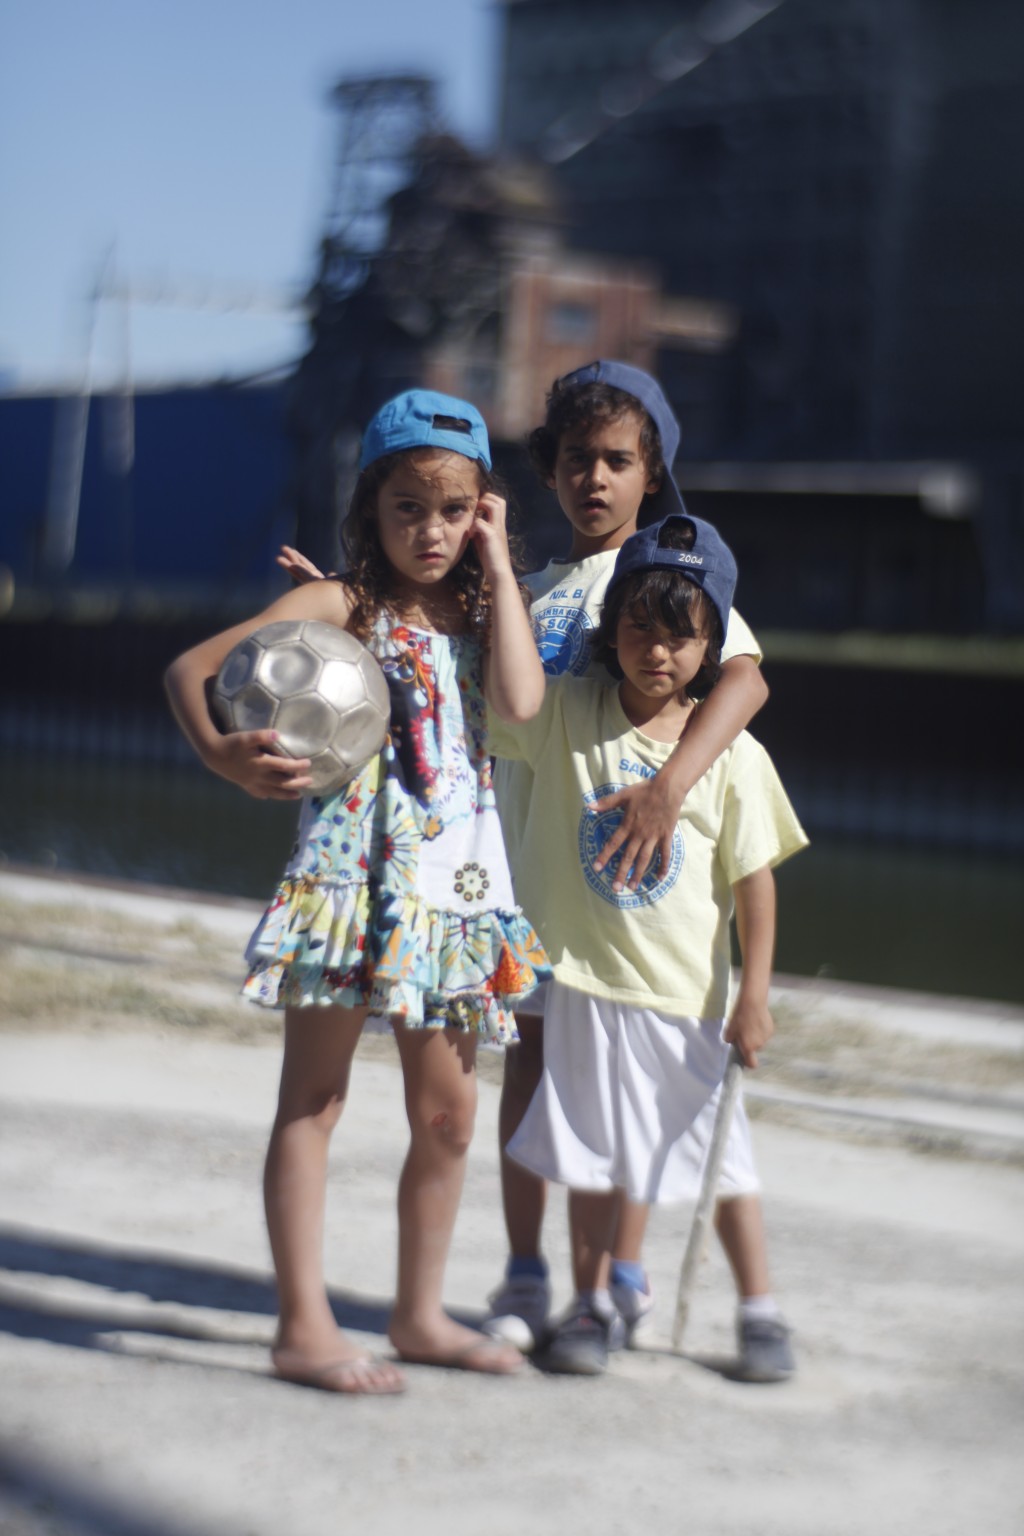 Kids Sample Photo Taken With Original Petzval Lens & Canon EOS 5D